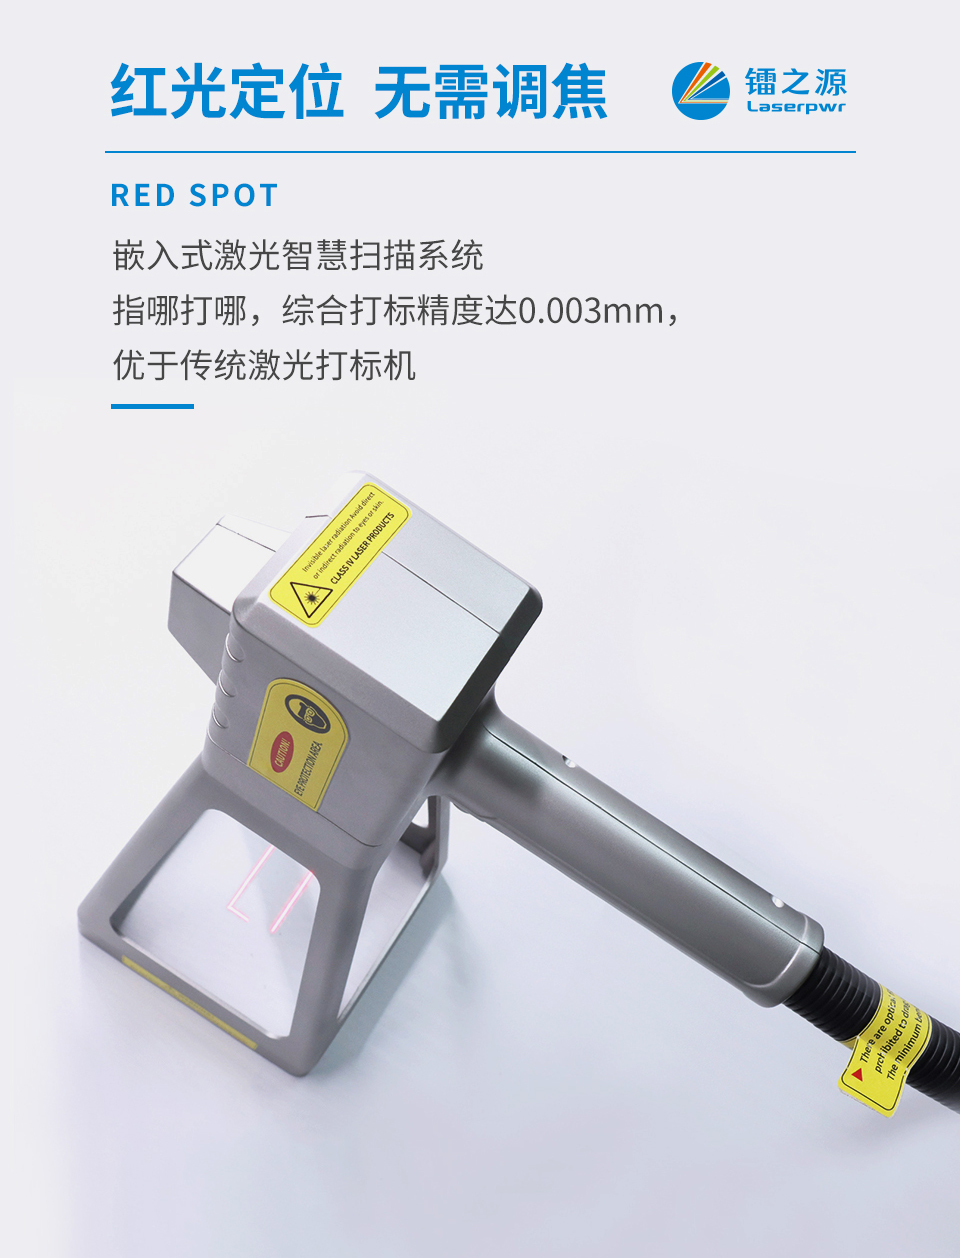 Portable Laser Etching Machine for State Grid Cement Poles Manufacturer's Logo Engraving Large Format Laser Engraving